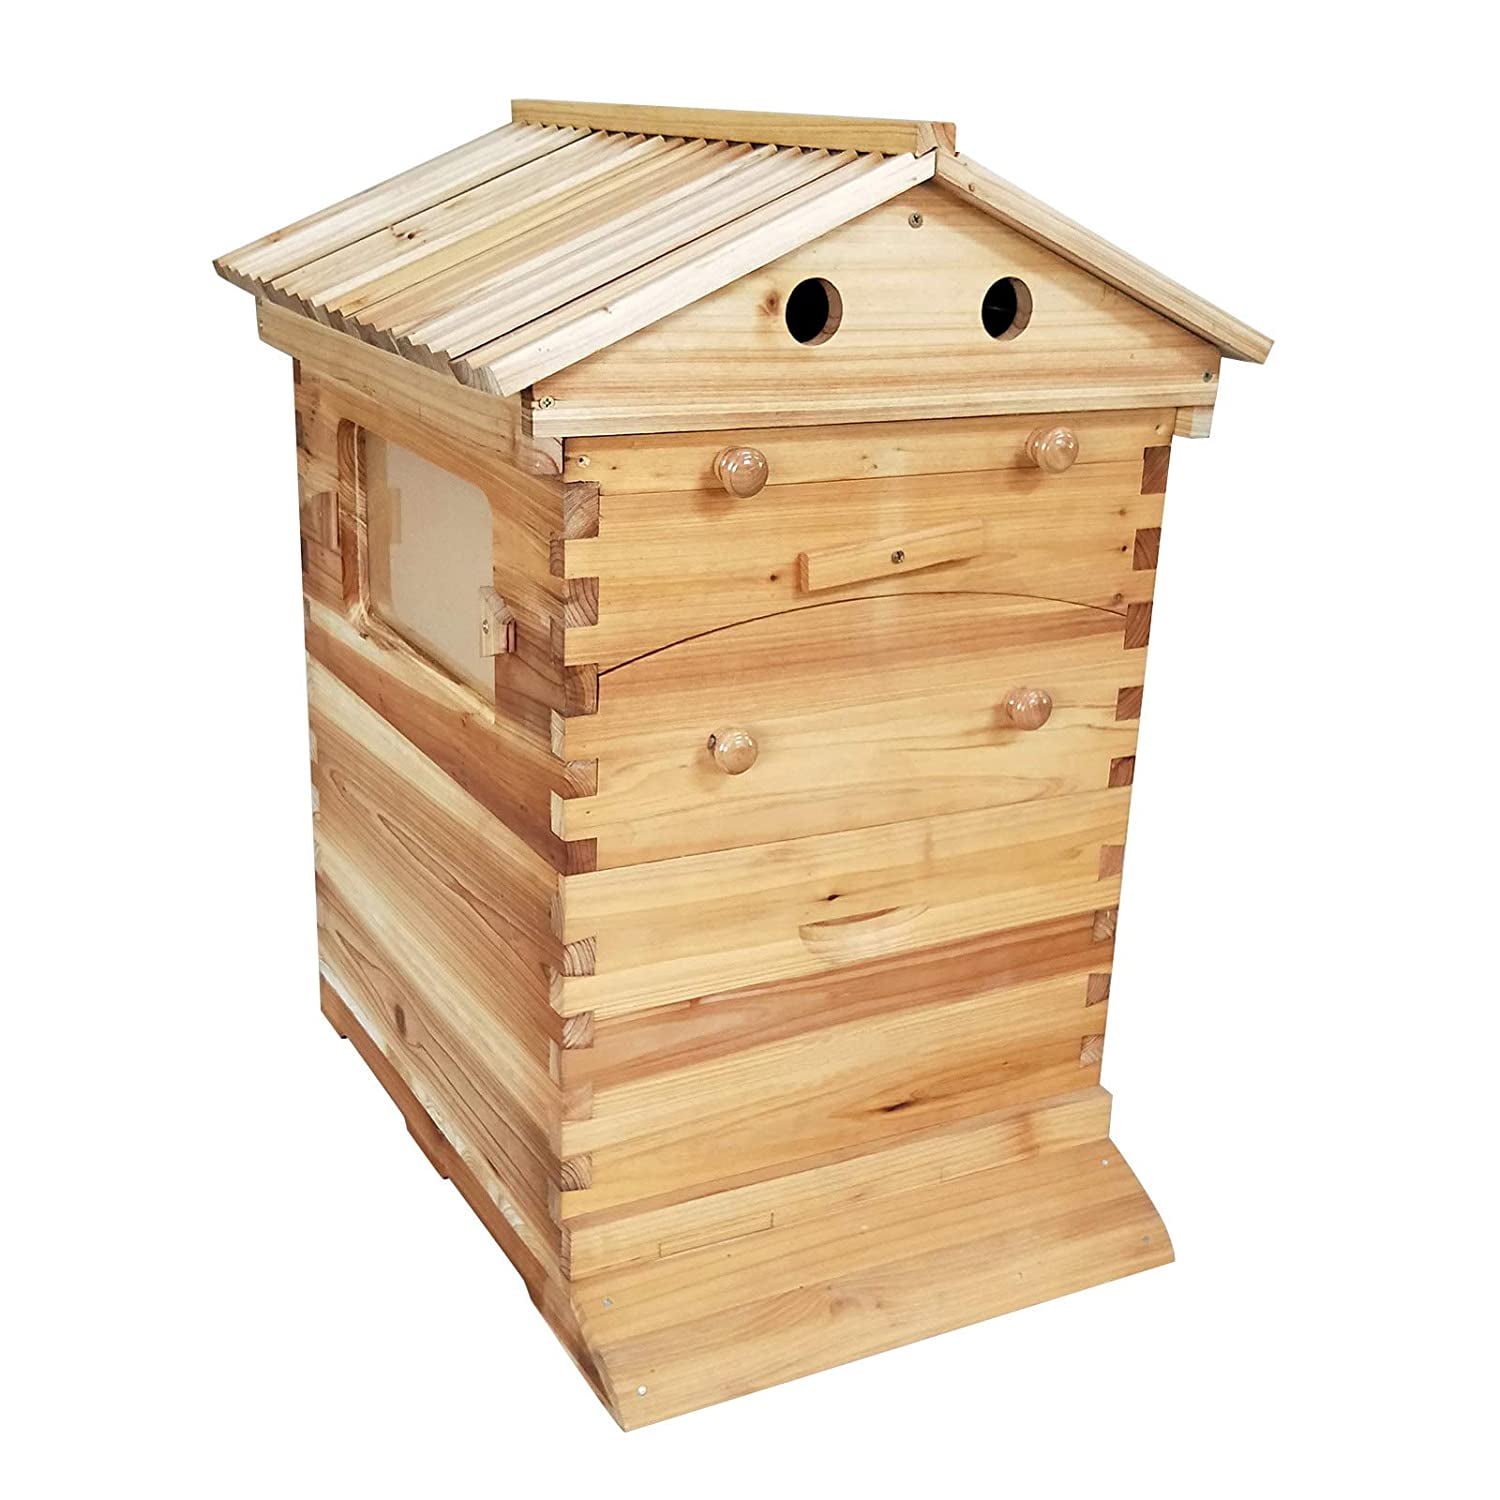 Cedarwood Professional Beekeeping Wood Bee House Bee Hive Solid Wood Beehive Box 